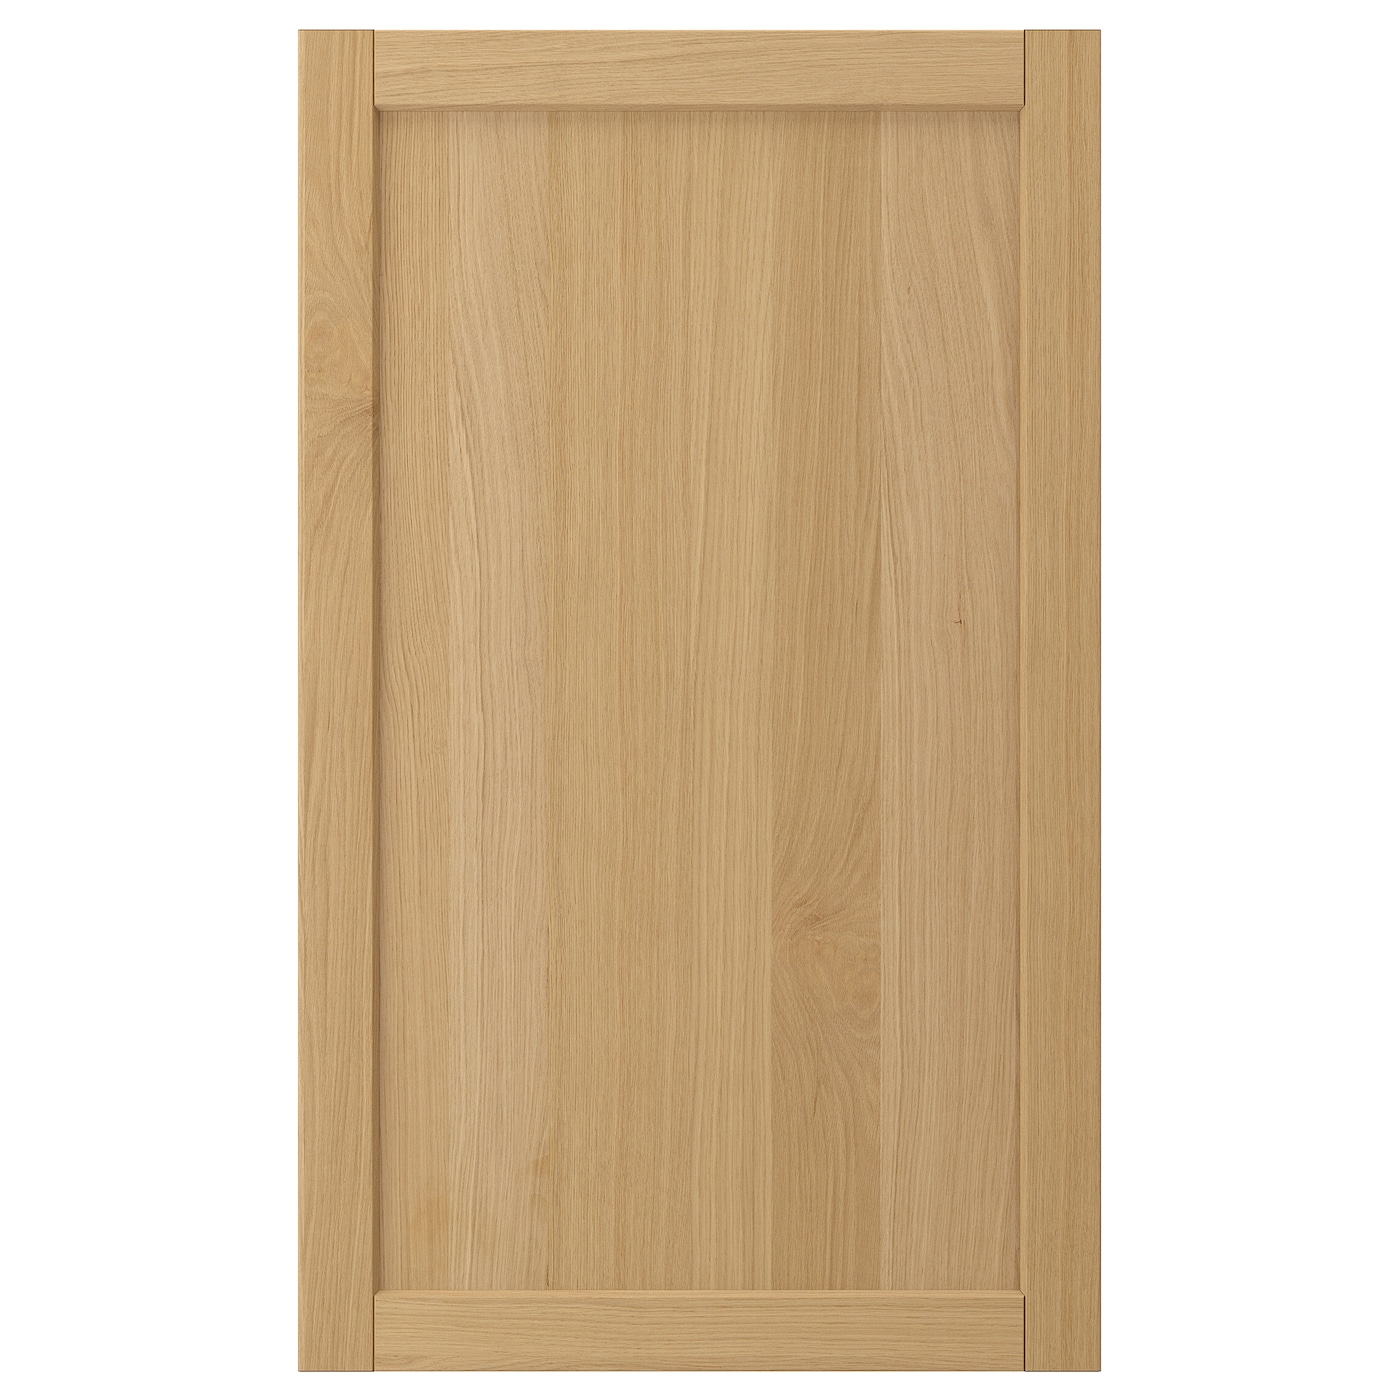 Дверца - FORSBACKA IKEA/ ФОРСБАКА ИКЕА,  100х60 см, под беленый дуб